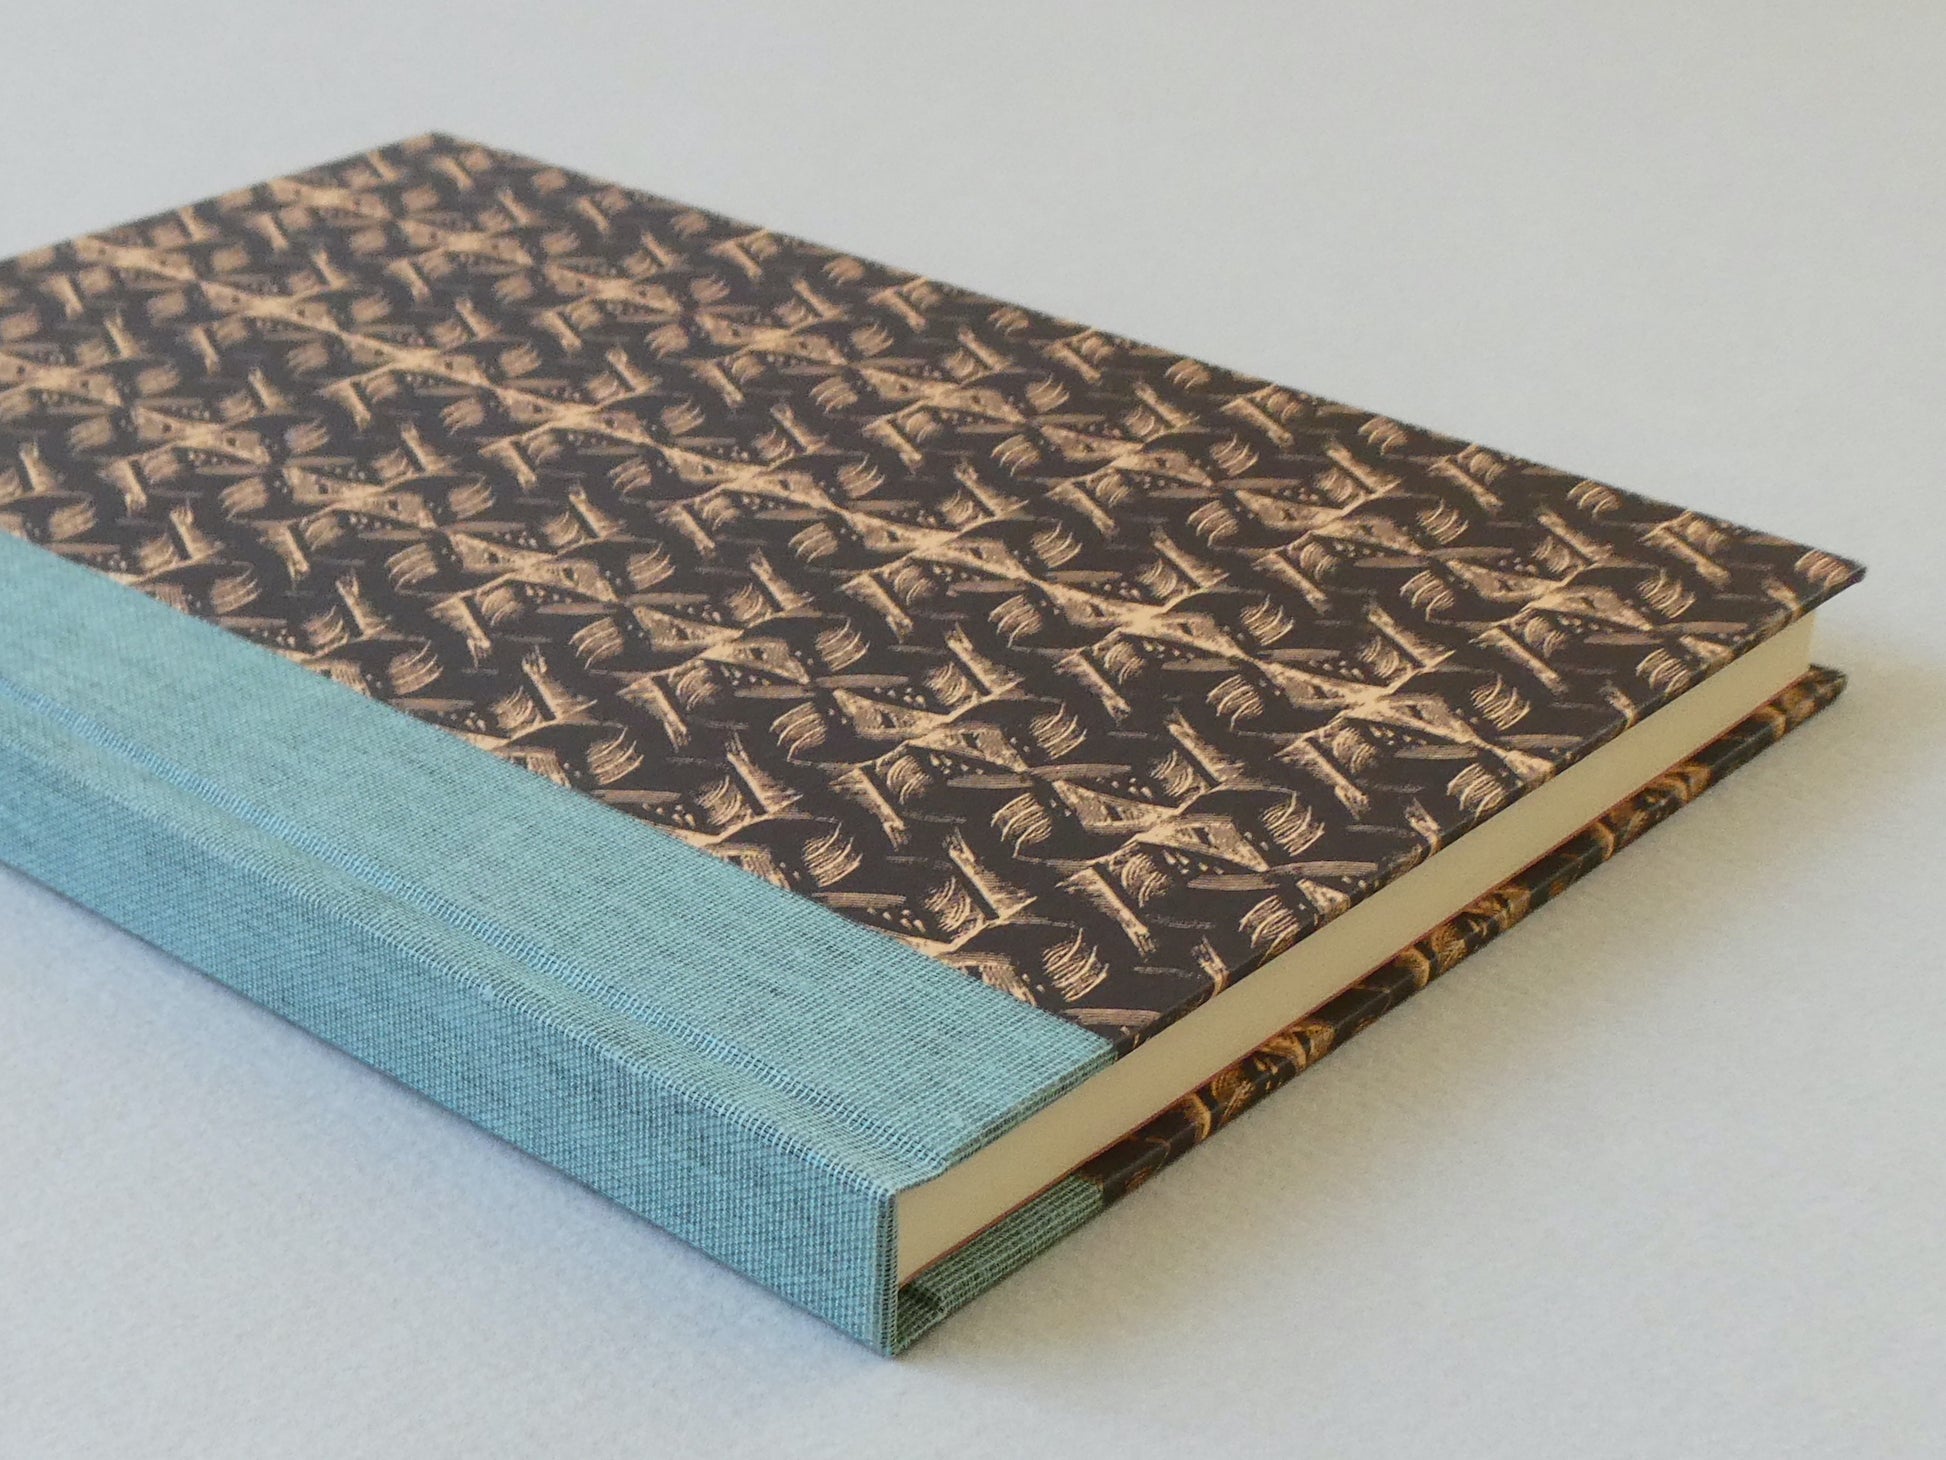 Enid Marx Sketchbook with Municipal pattern spine